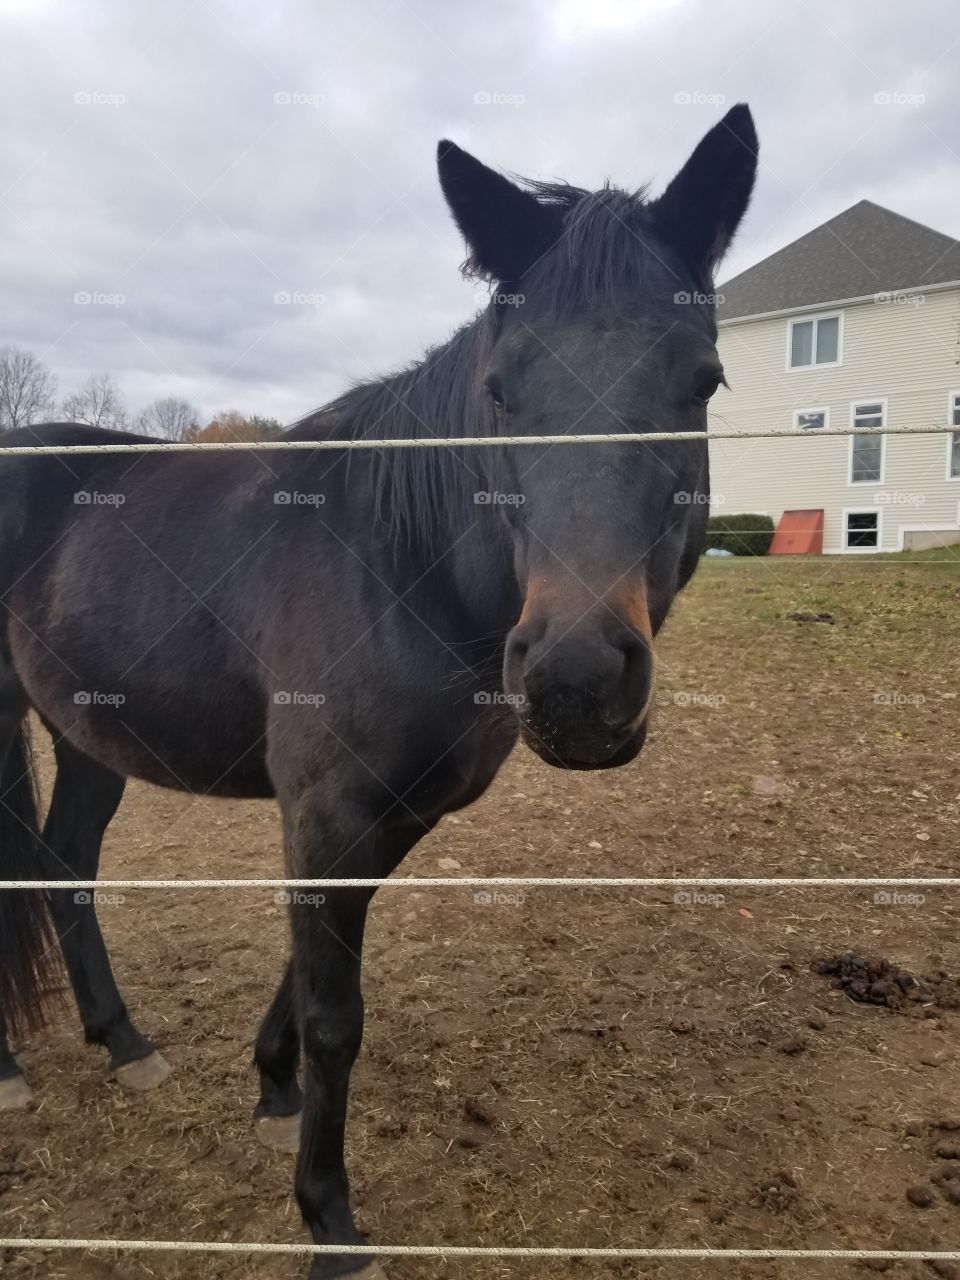 A horse on a farm in rural Connecticut.